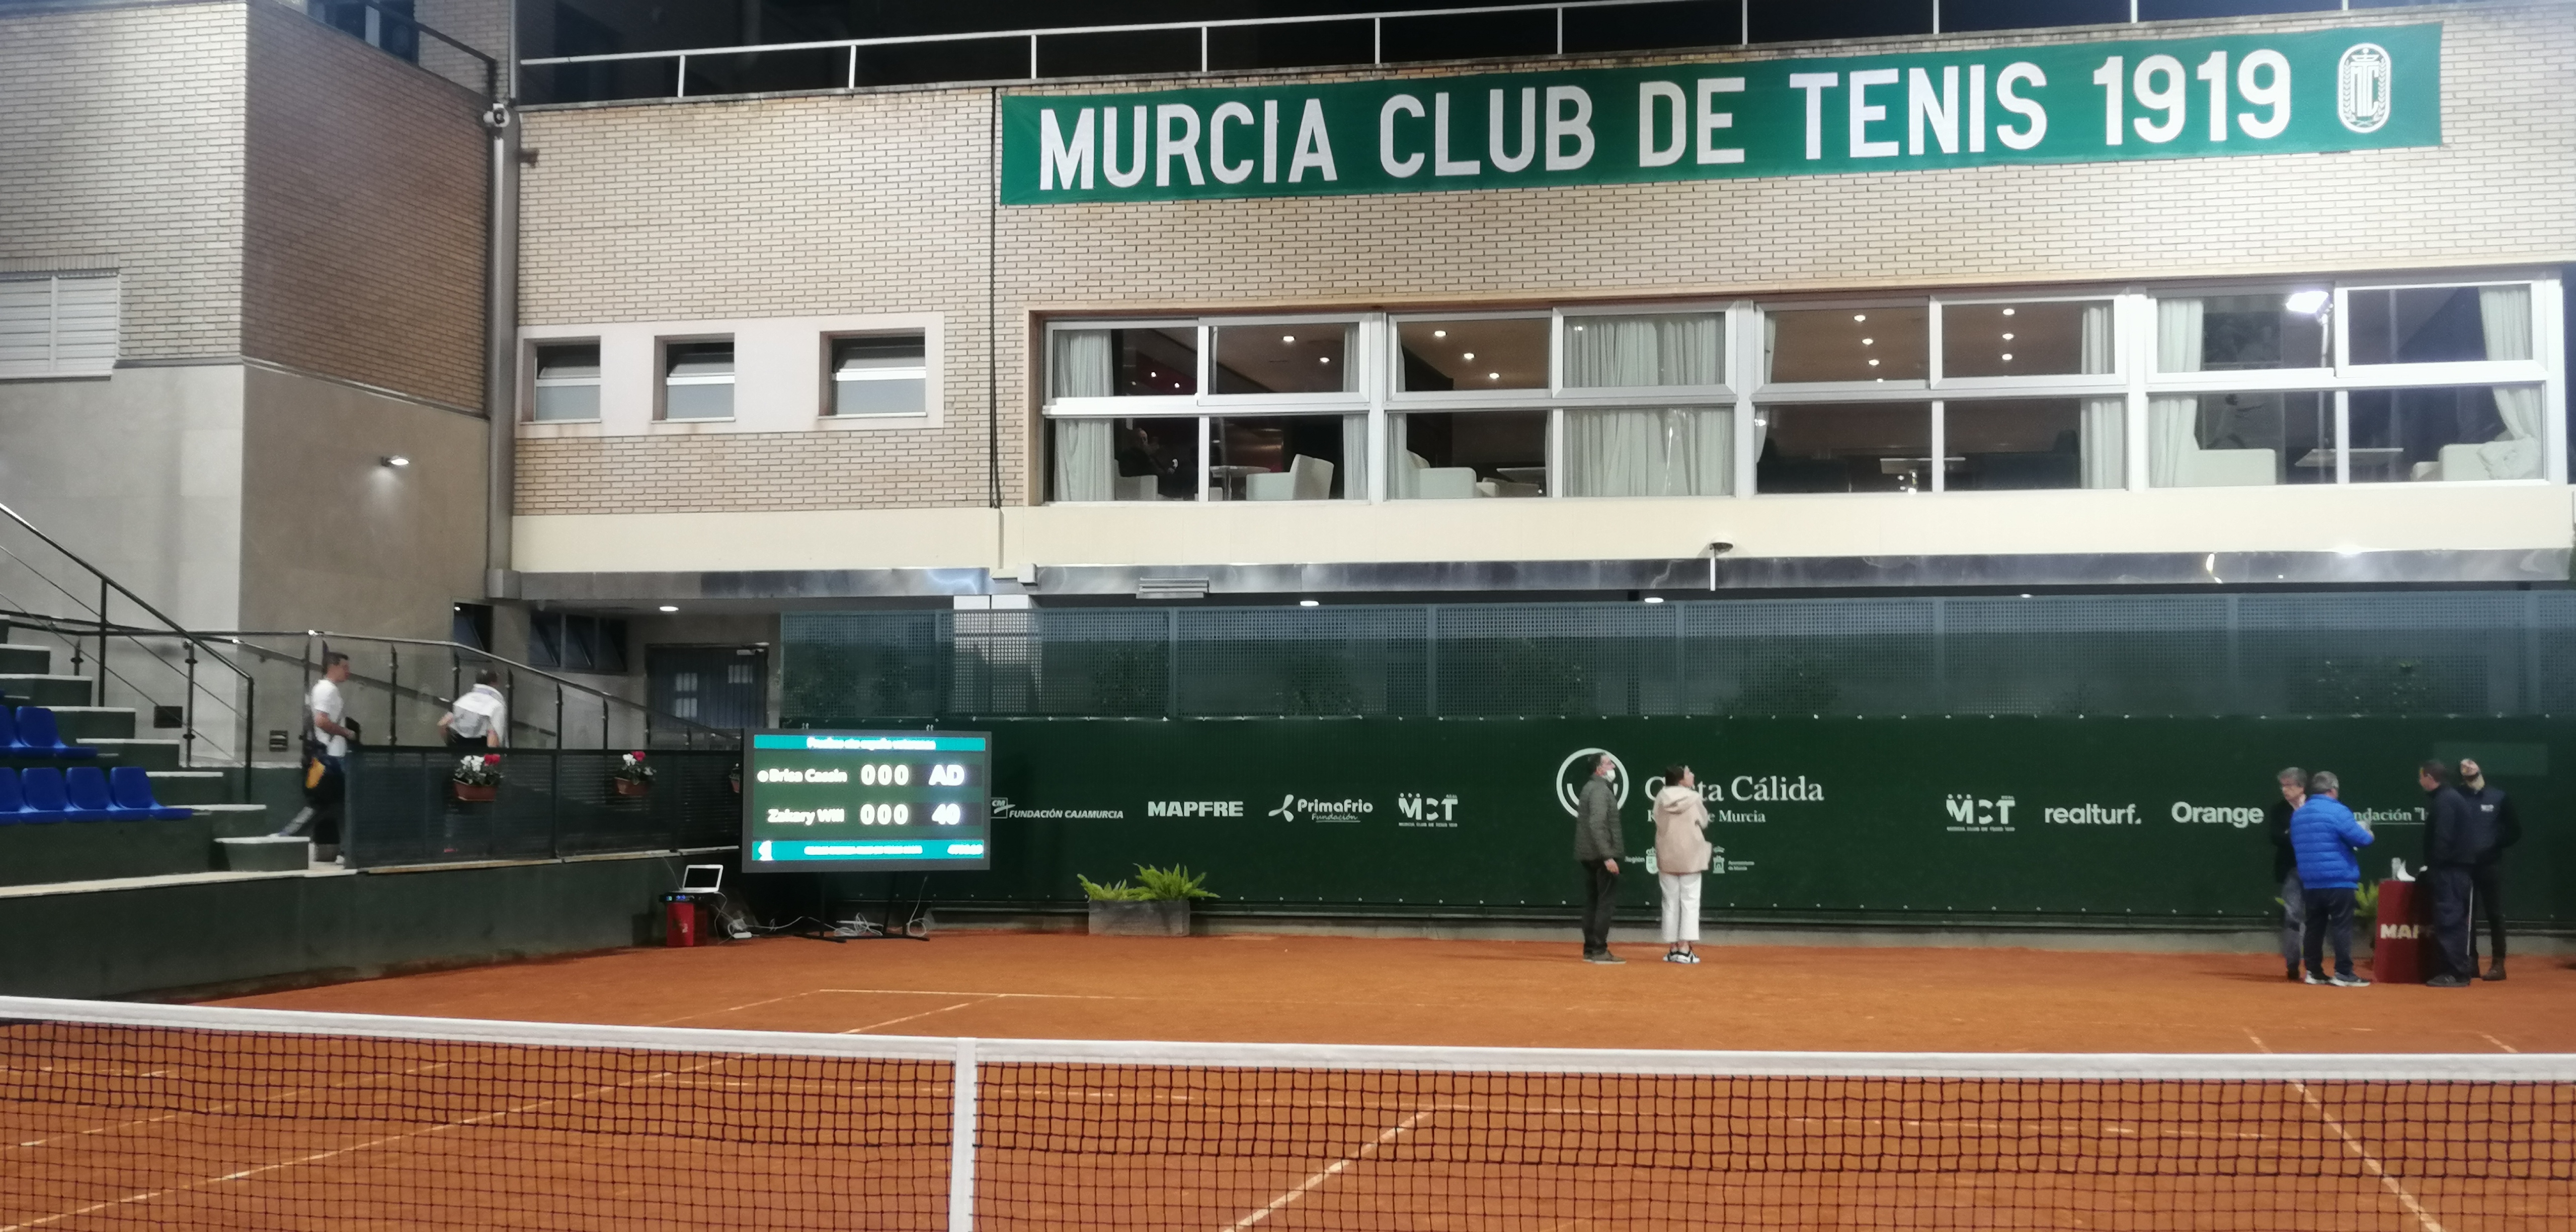 Murcia Club de Tenis